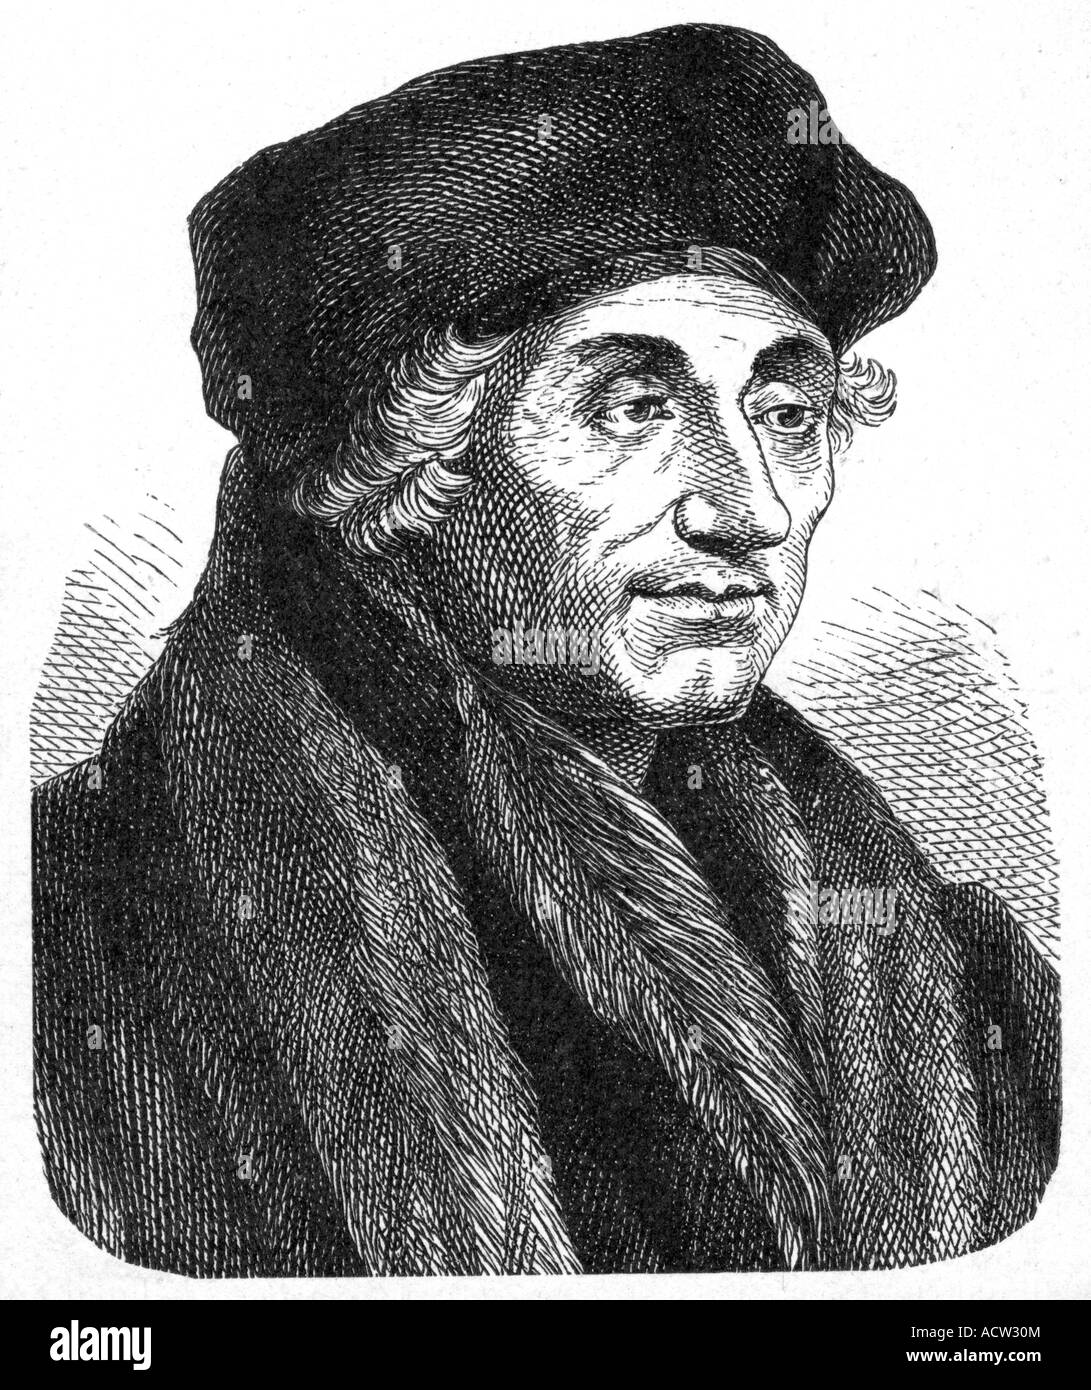 Desiderius Erasmus Roterodamus, (Desiderius Erasmus of Rotterdam), 27.10.1469 - 12.7.1536, Dutch humanist and theologian, portrait, engraving, 19th century, Stock Photo